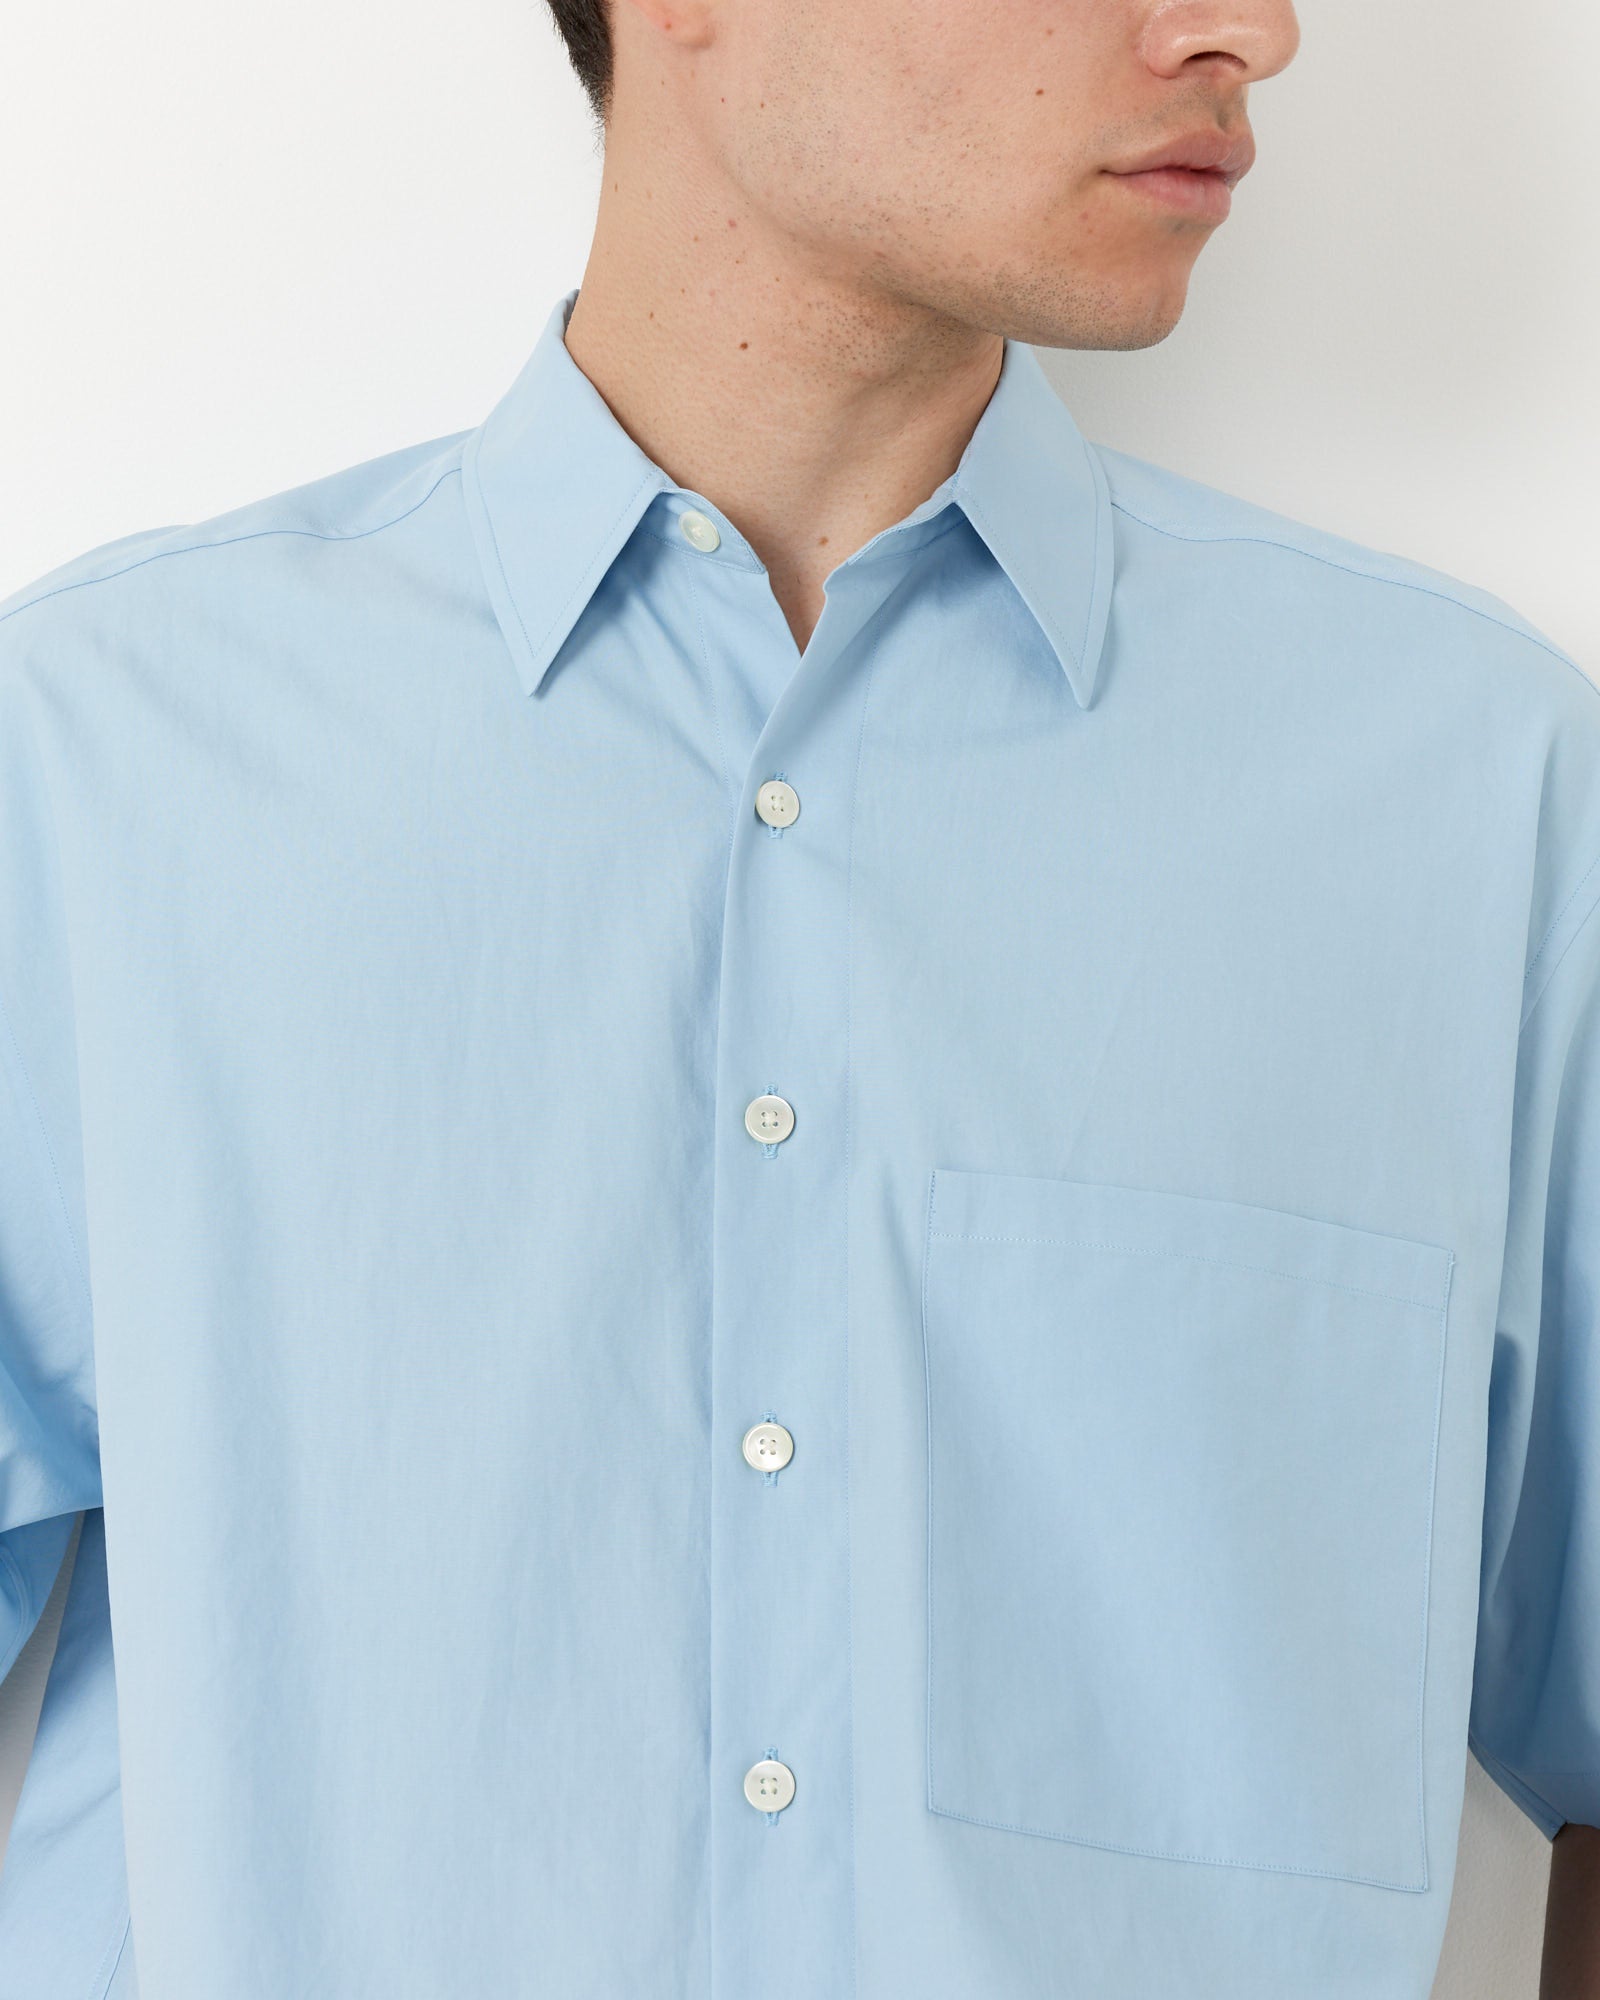 Washed Finx Twill Big Half Sleeve Shirt in Sax Blue